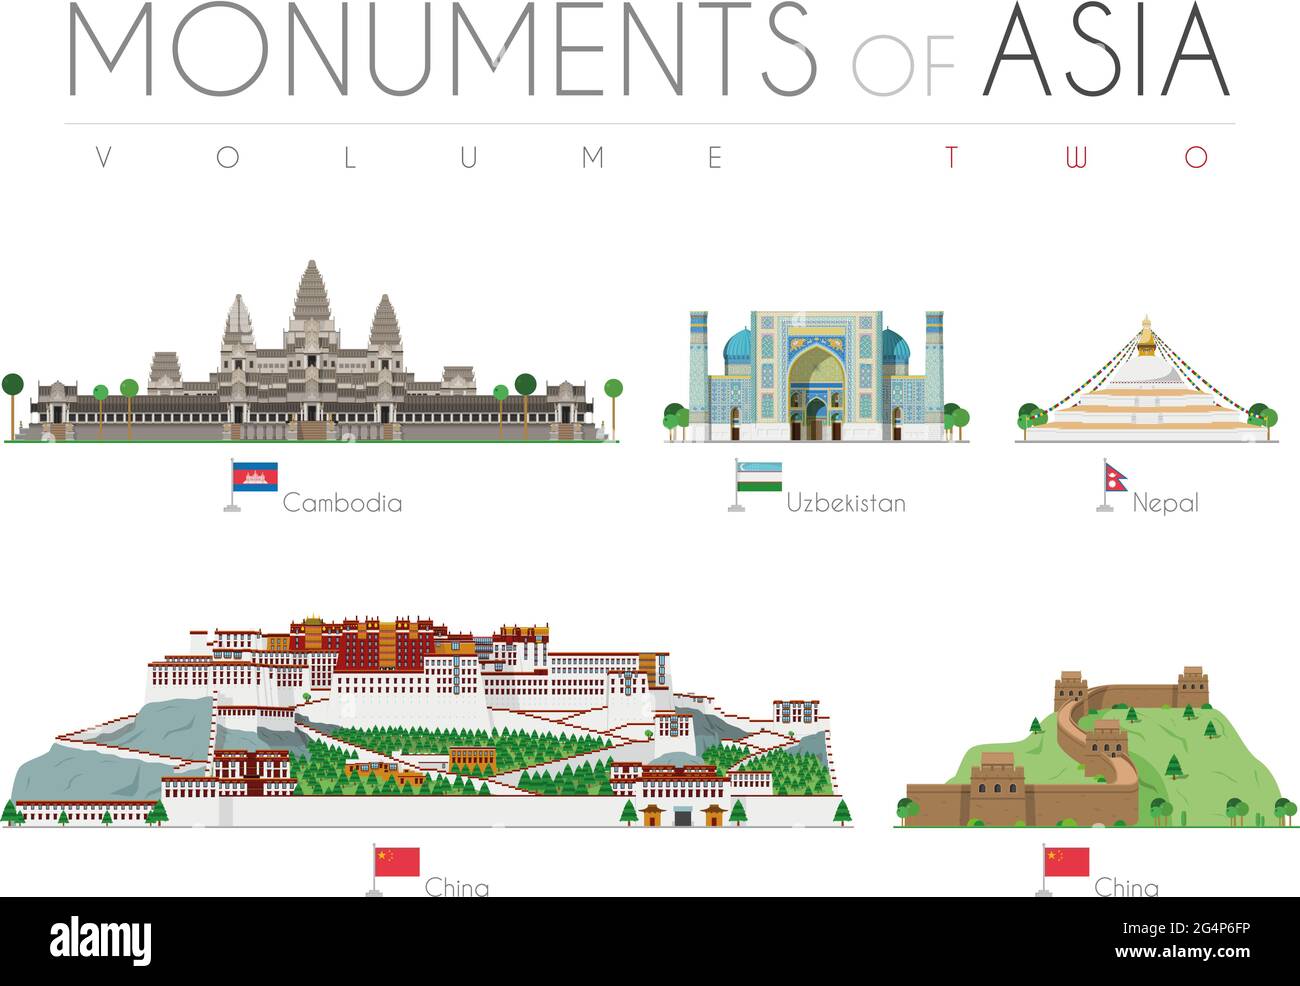 Monumenti dell'Asia in stile cartoon Volume 2: Angkor Bat (Cambogia), Ragastan Samrakand (Uzbekistan), Boudhanath Stupa (Nepal), Potala Palace e Great Illustrazione Vettoriale